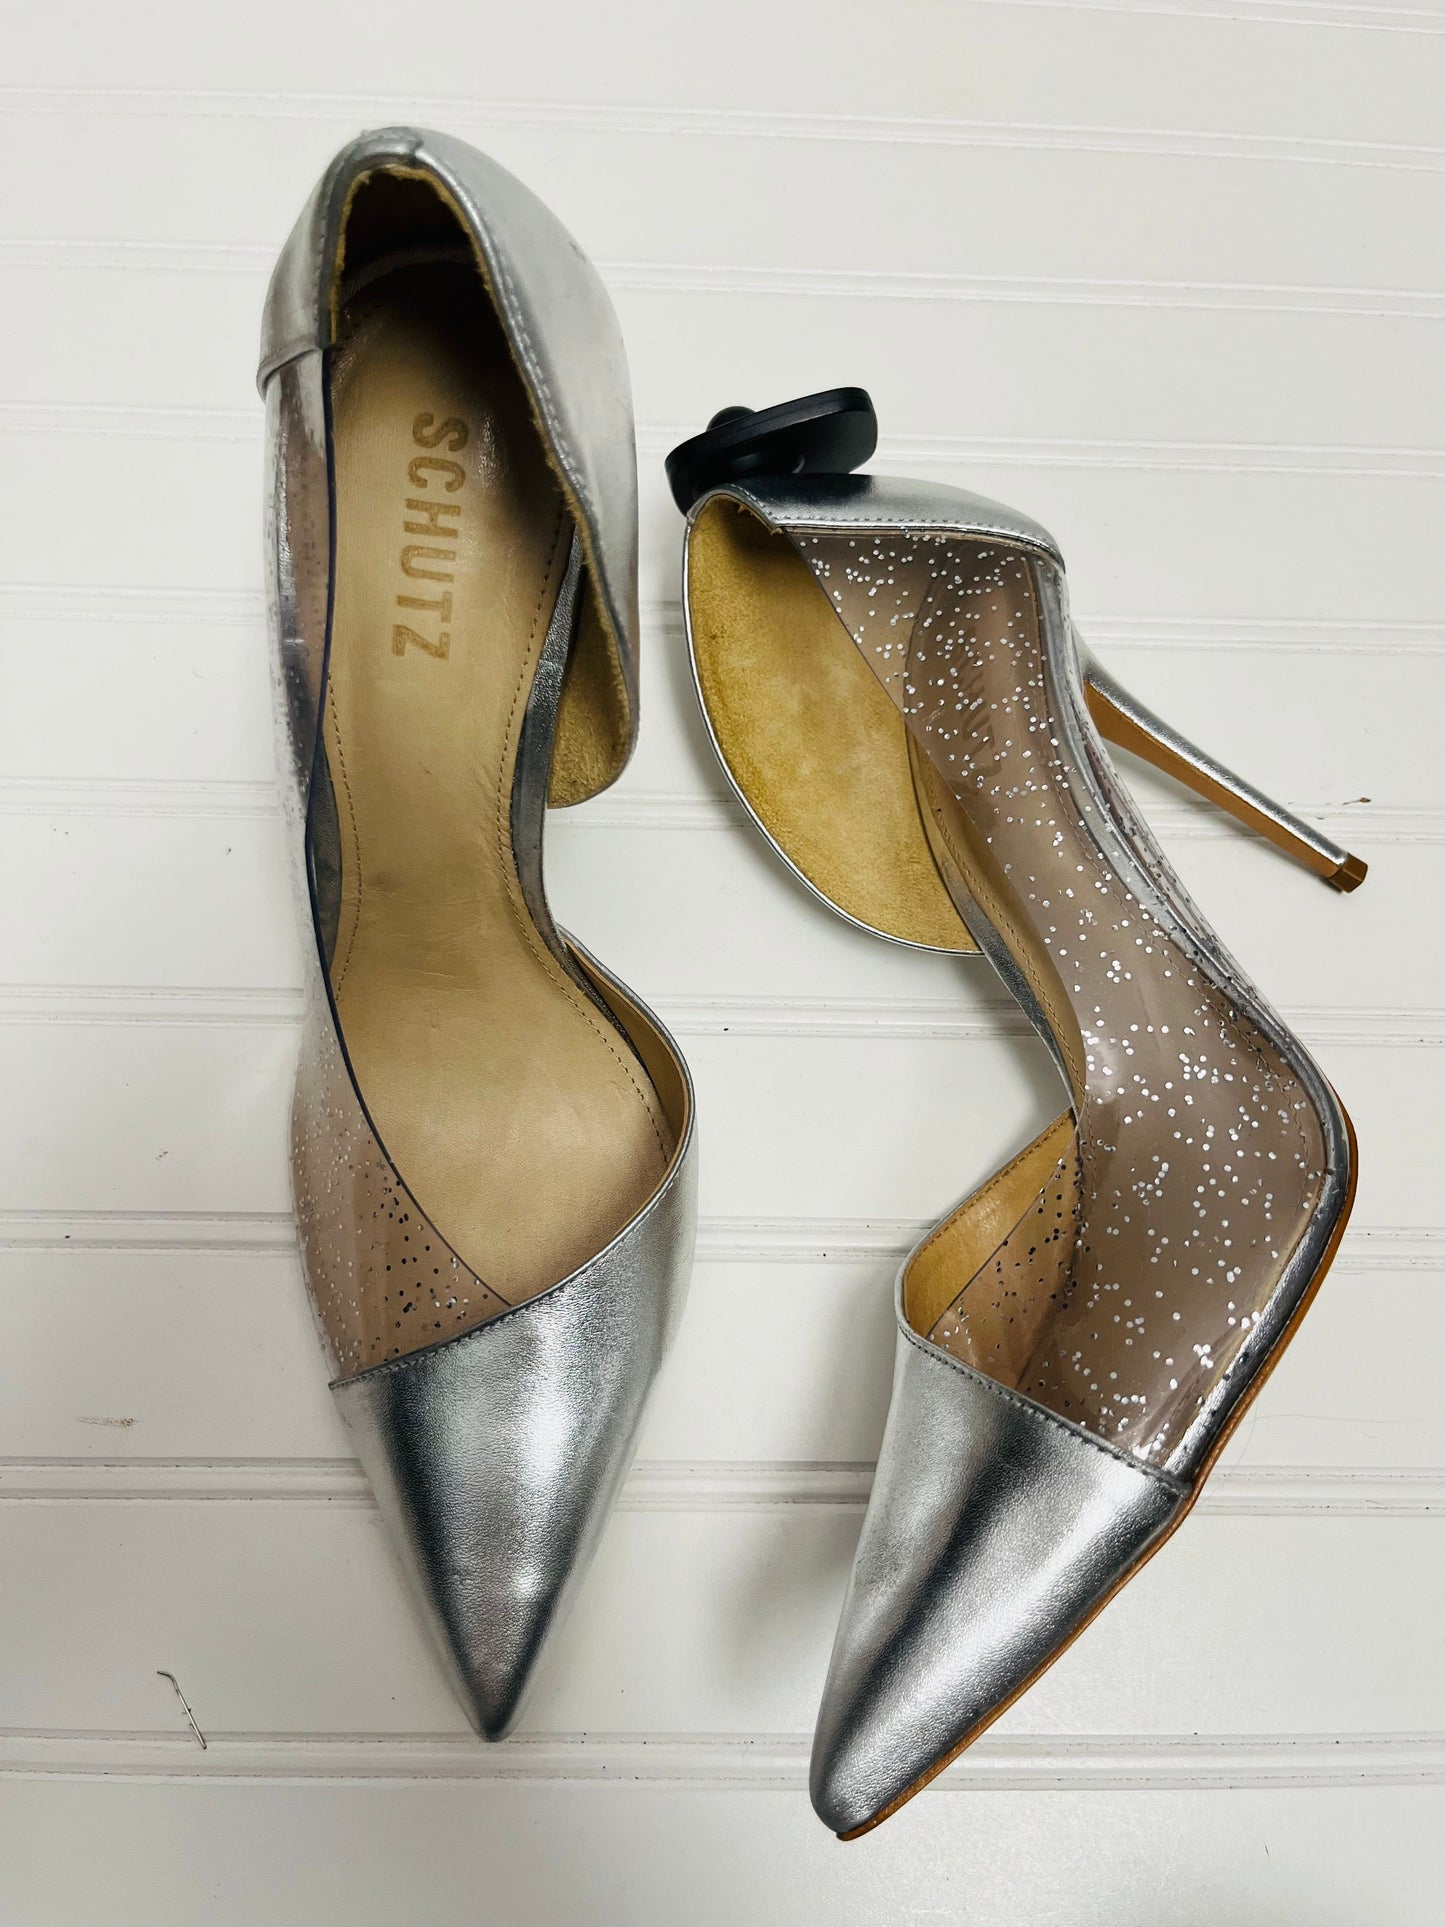 Silver Shoes Heels Stiletto shultz, Size 9.5